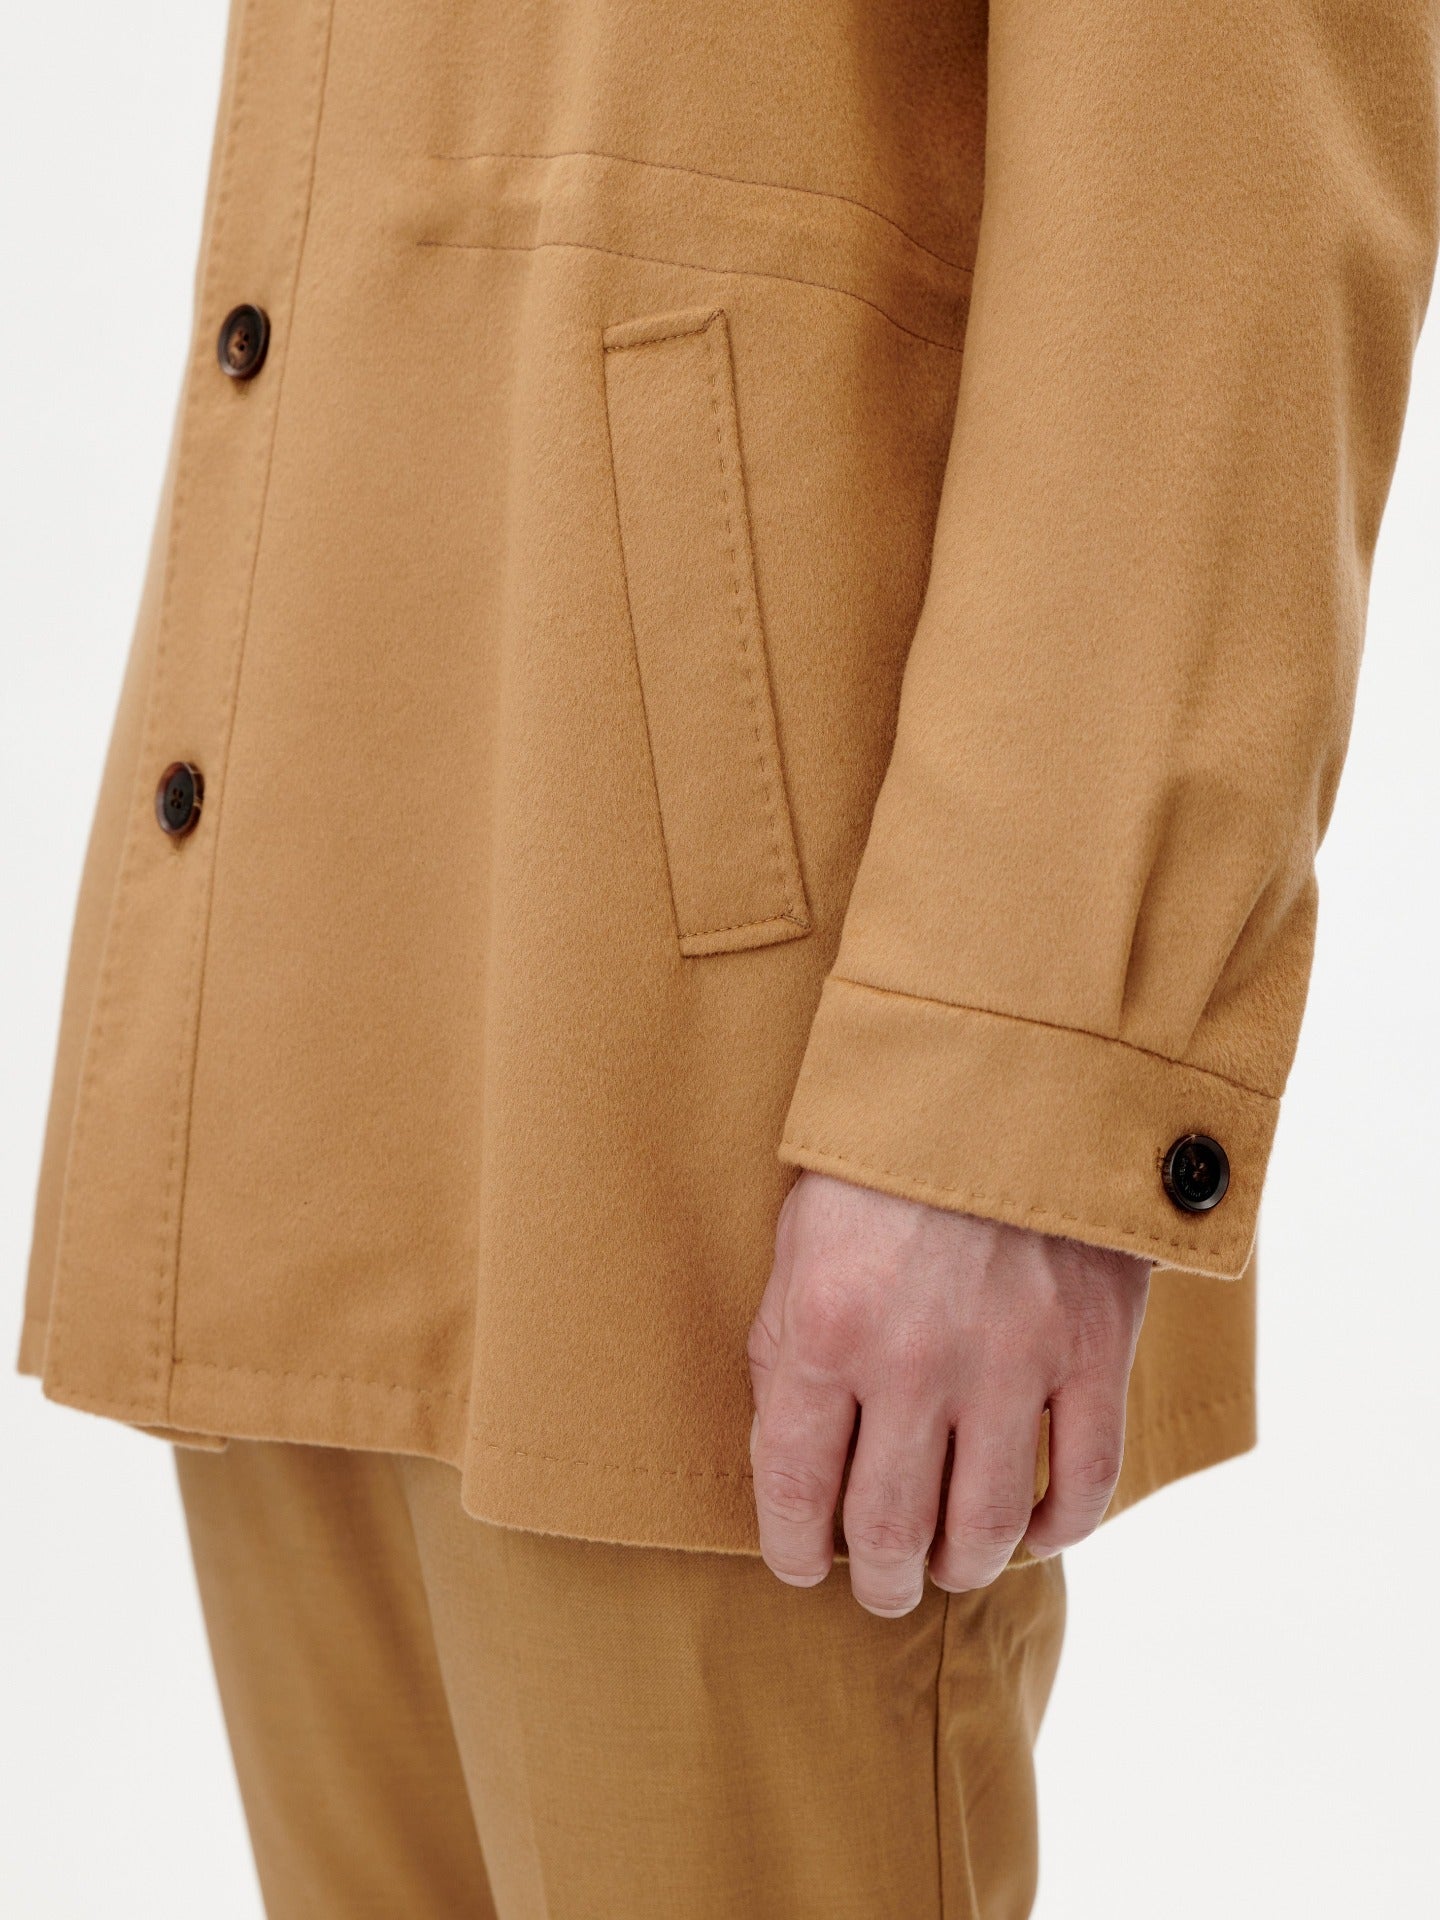 Men's Cashmere Stand Collar Pea Coat almond - Gobi Cashmere